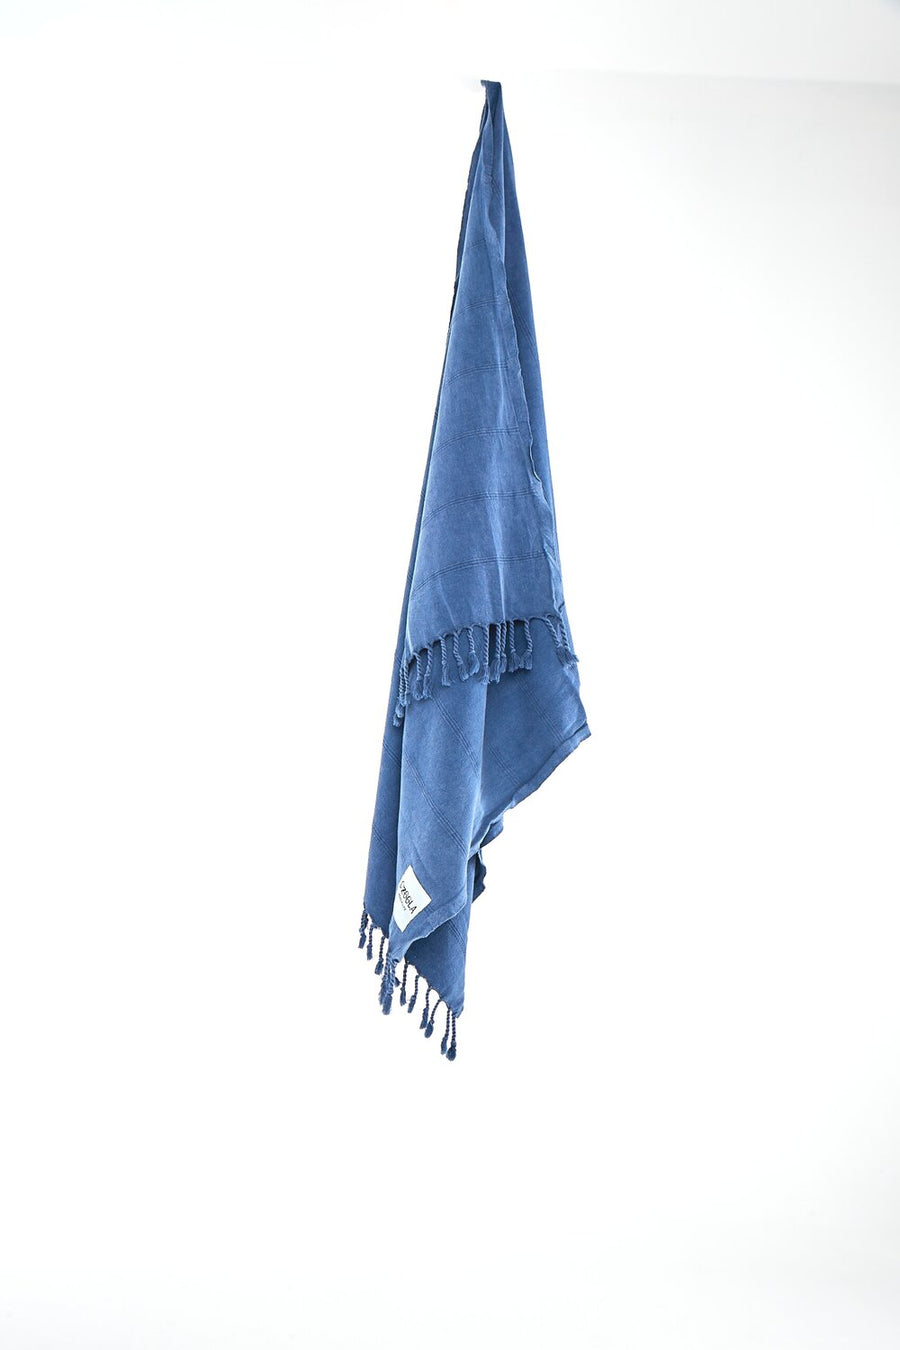 Ozoola Turkish beach towel in blue stonewash hanging